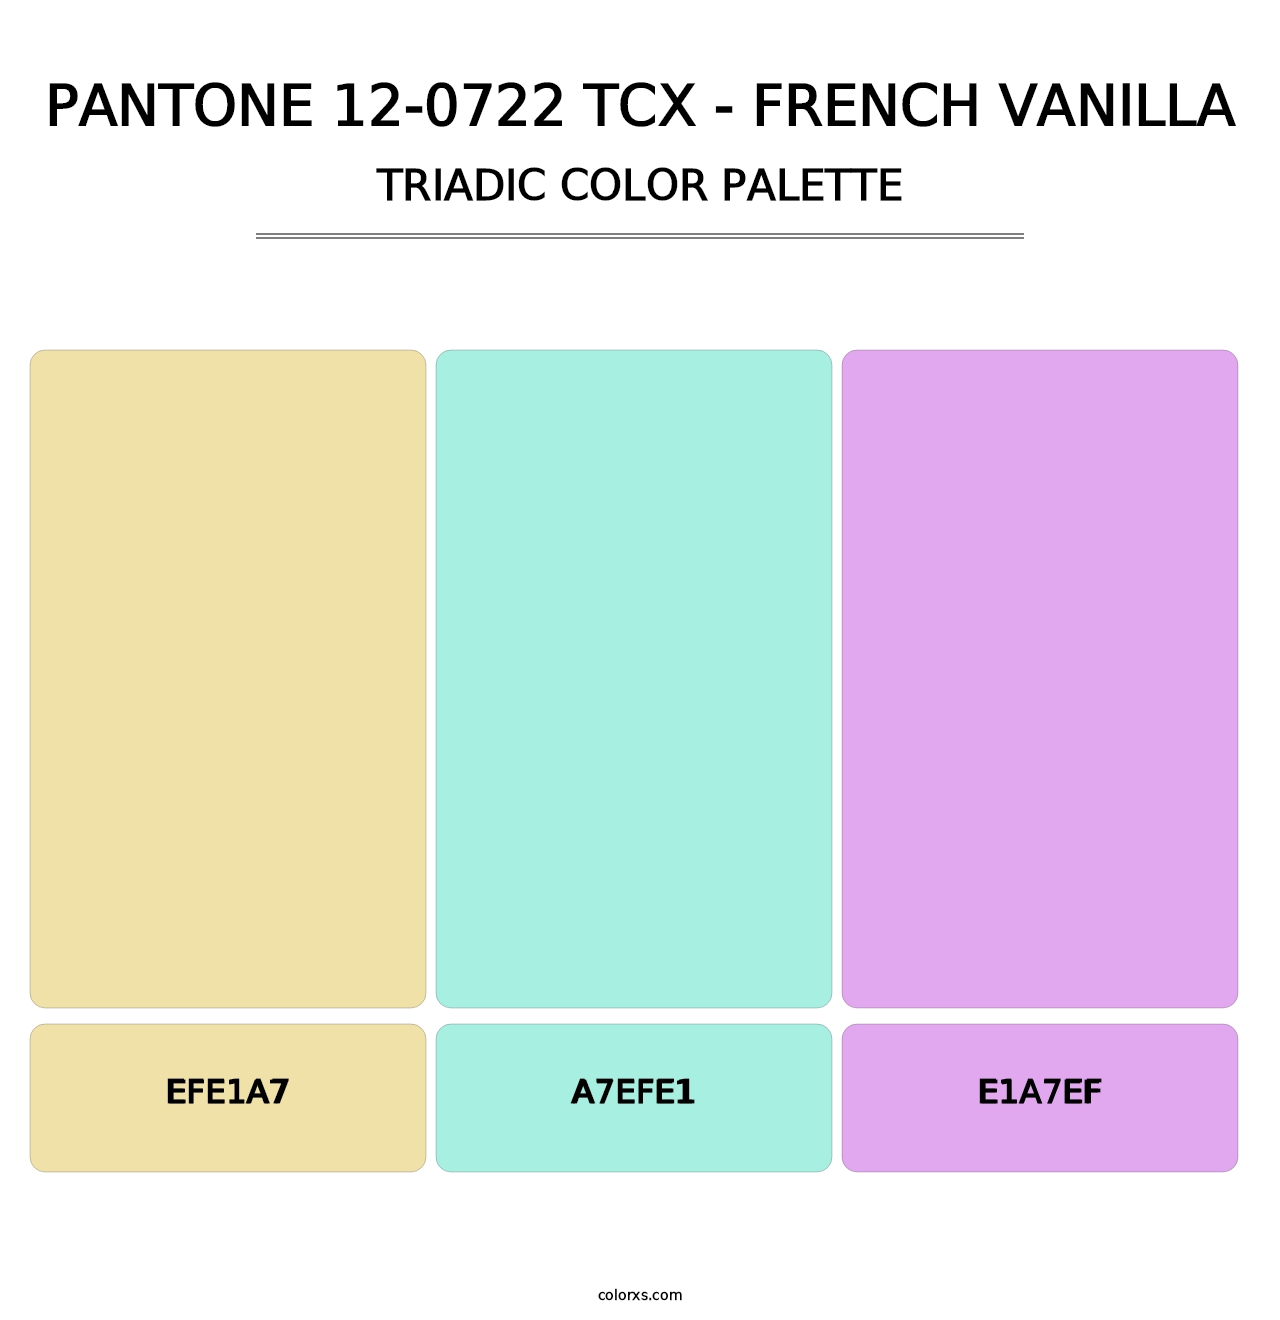 PANTONE 12-0722 TCX - French Vanilla - Triadic Color Palette